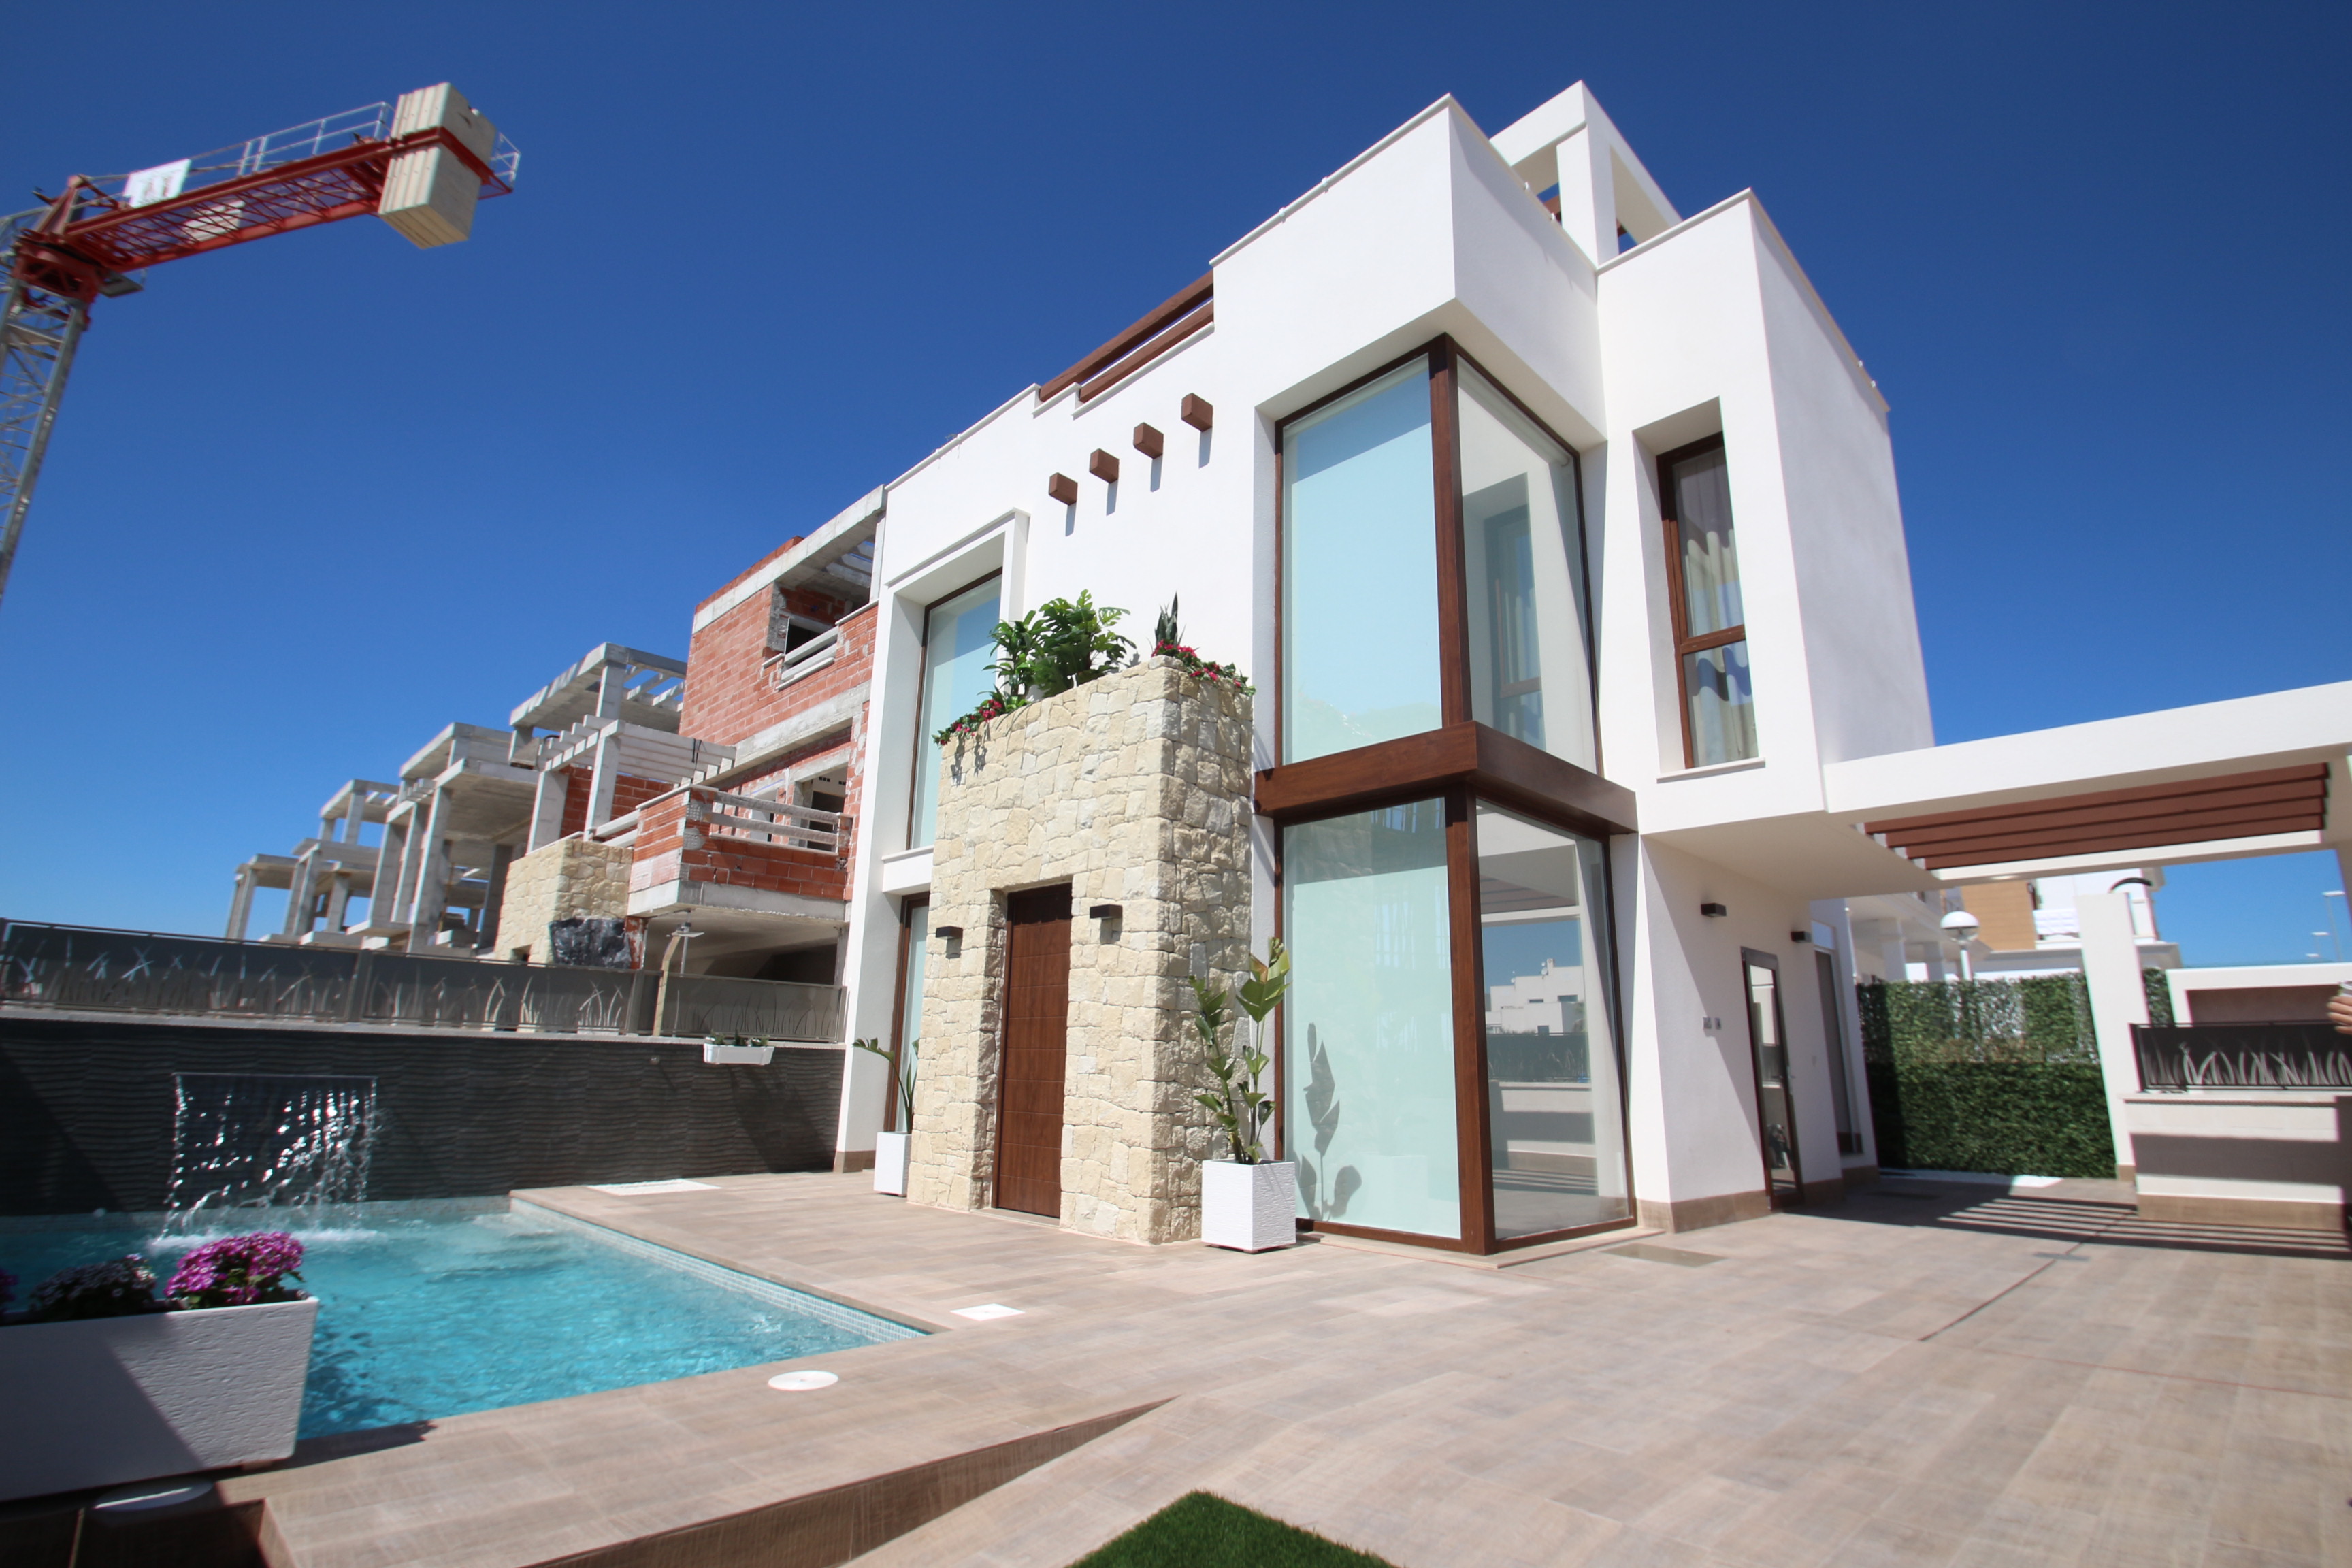 New built luxury villas in Quesada